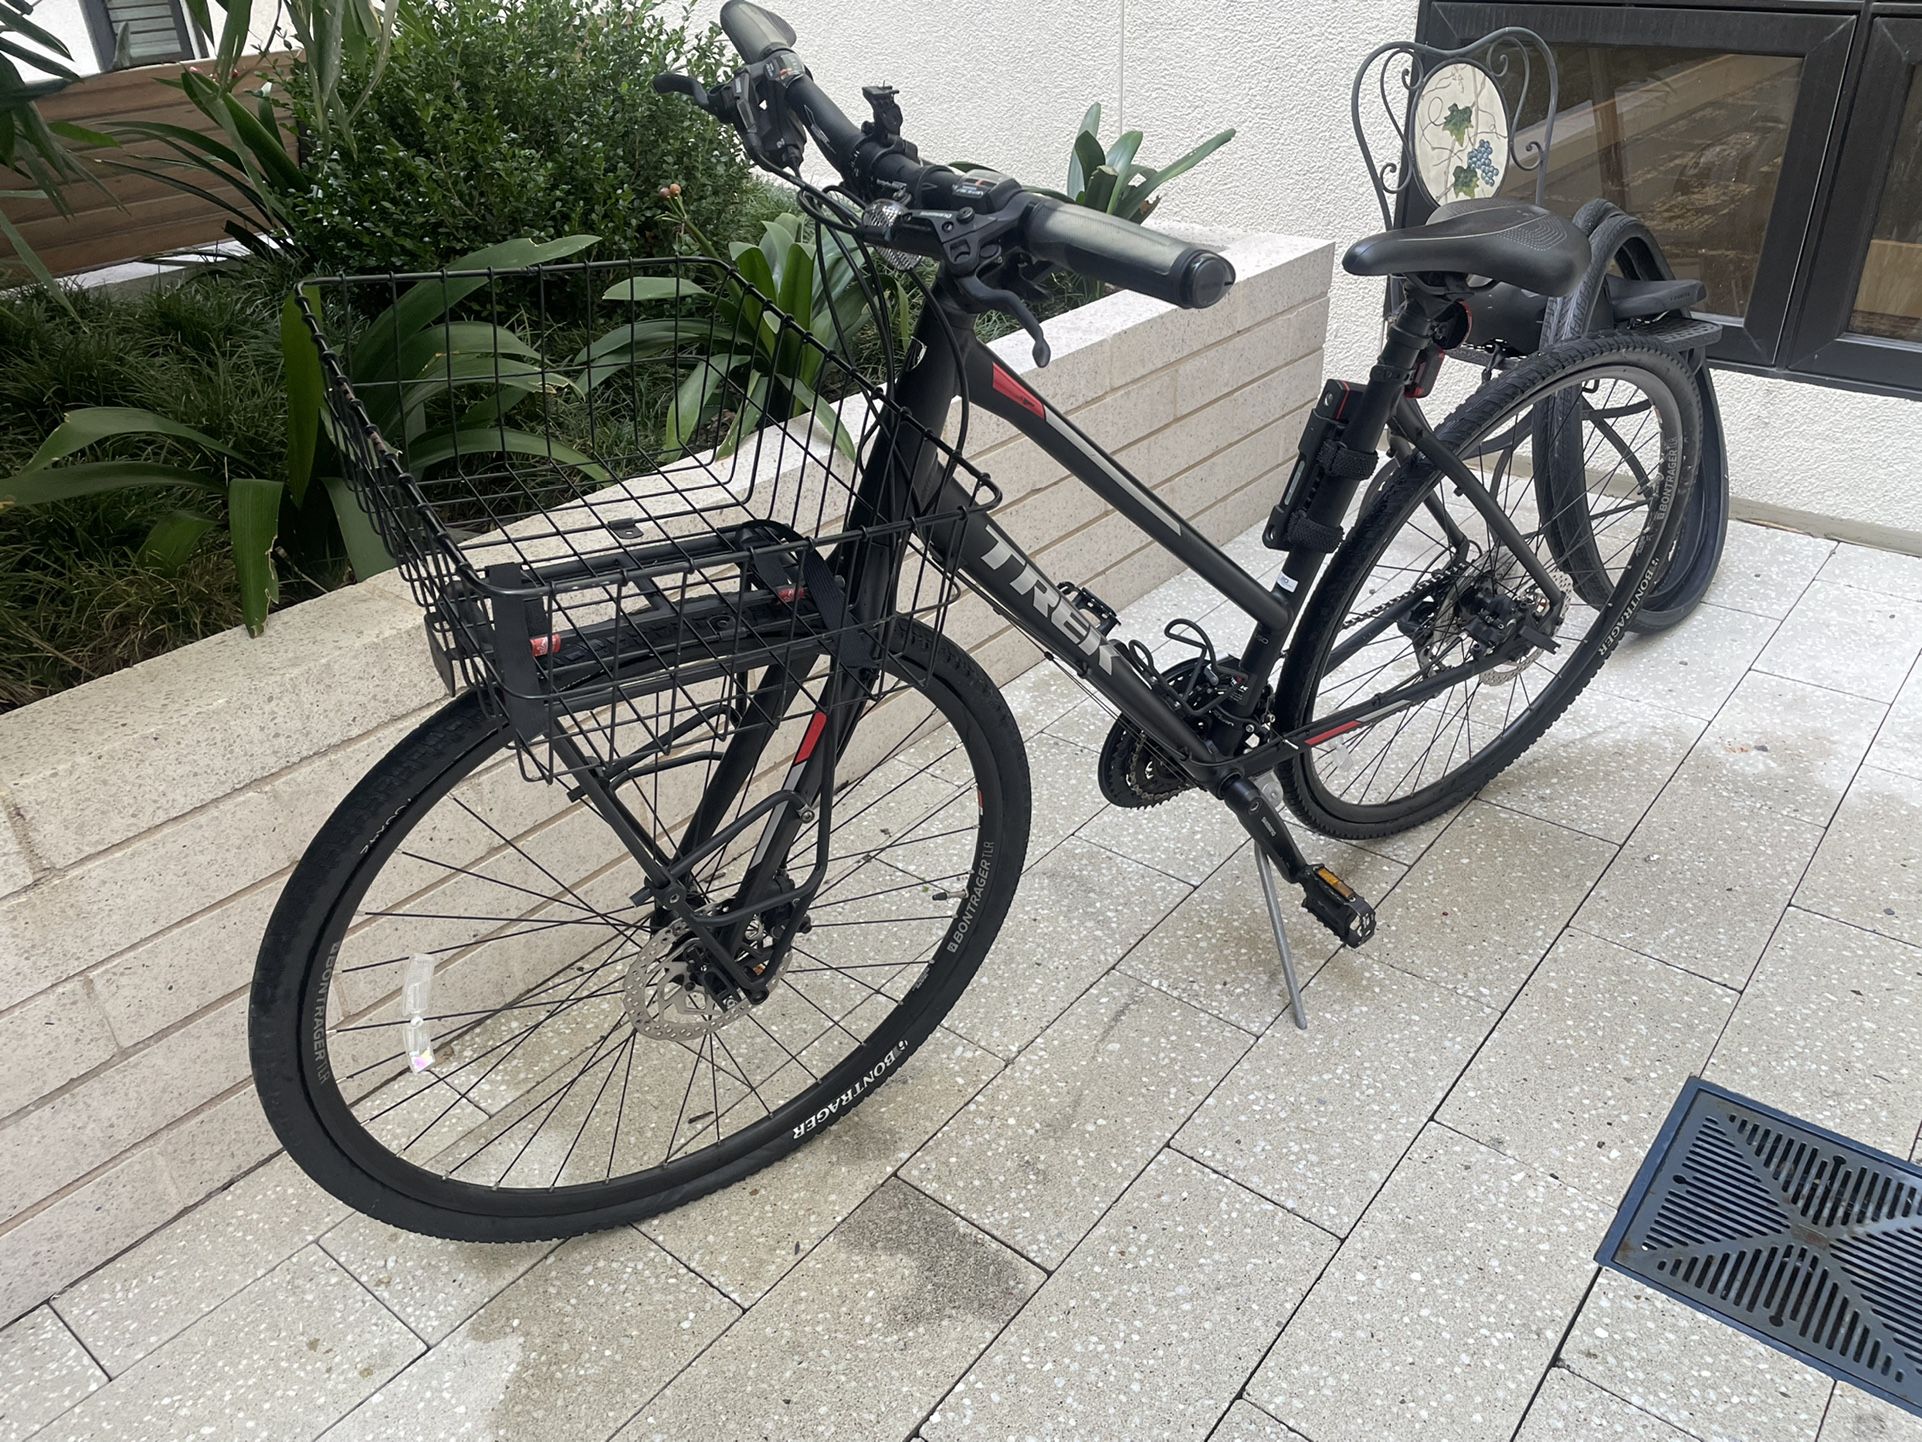 Trek Hybrid Bike